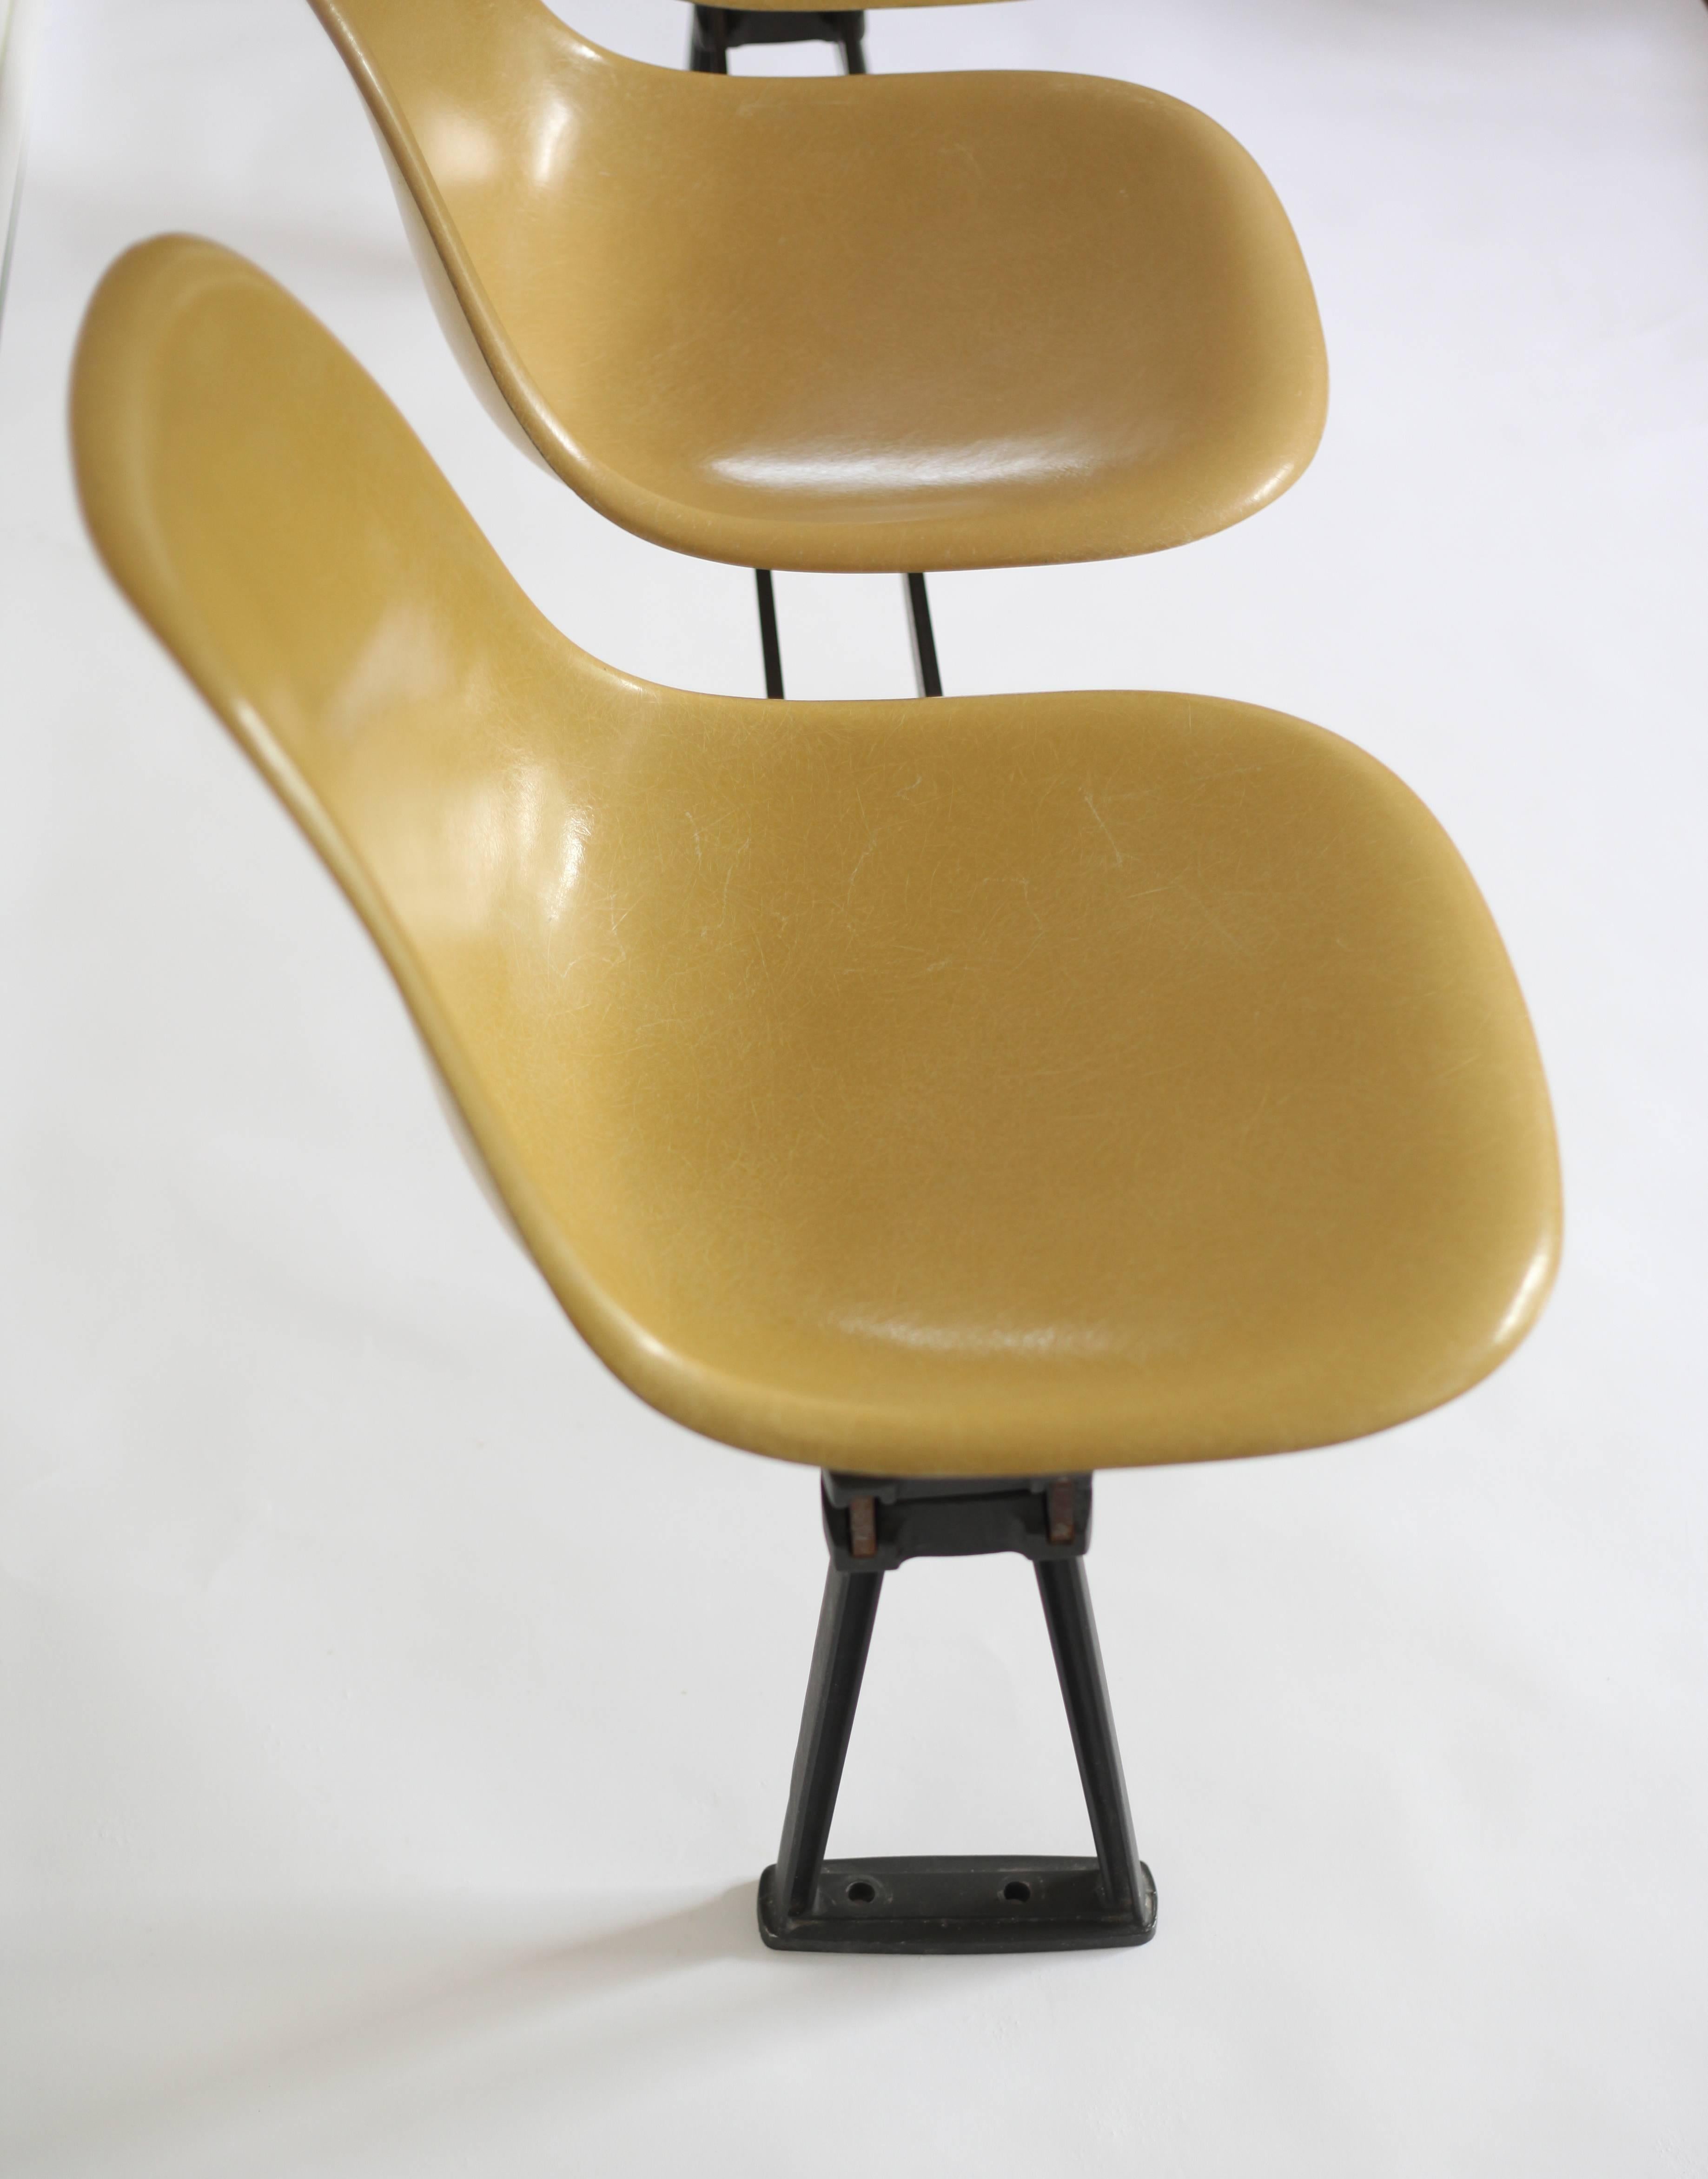 American Herman Miller Eames Fiberglass Ochre Chairs on Tandem Seating, 1968